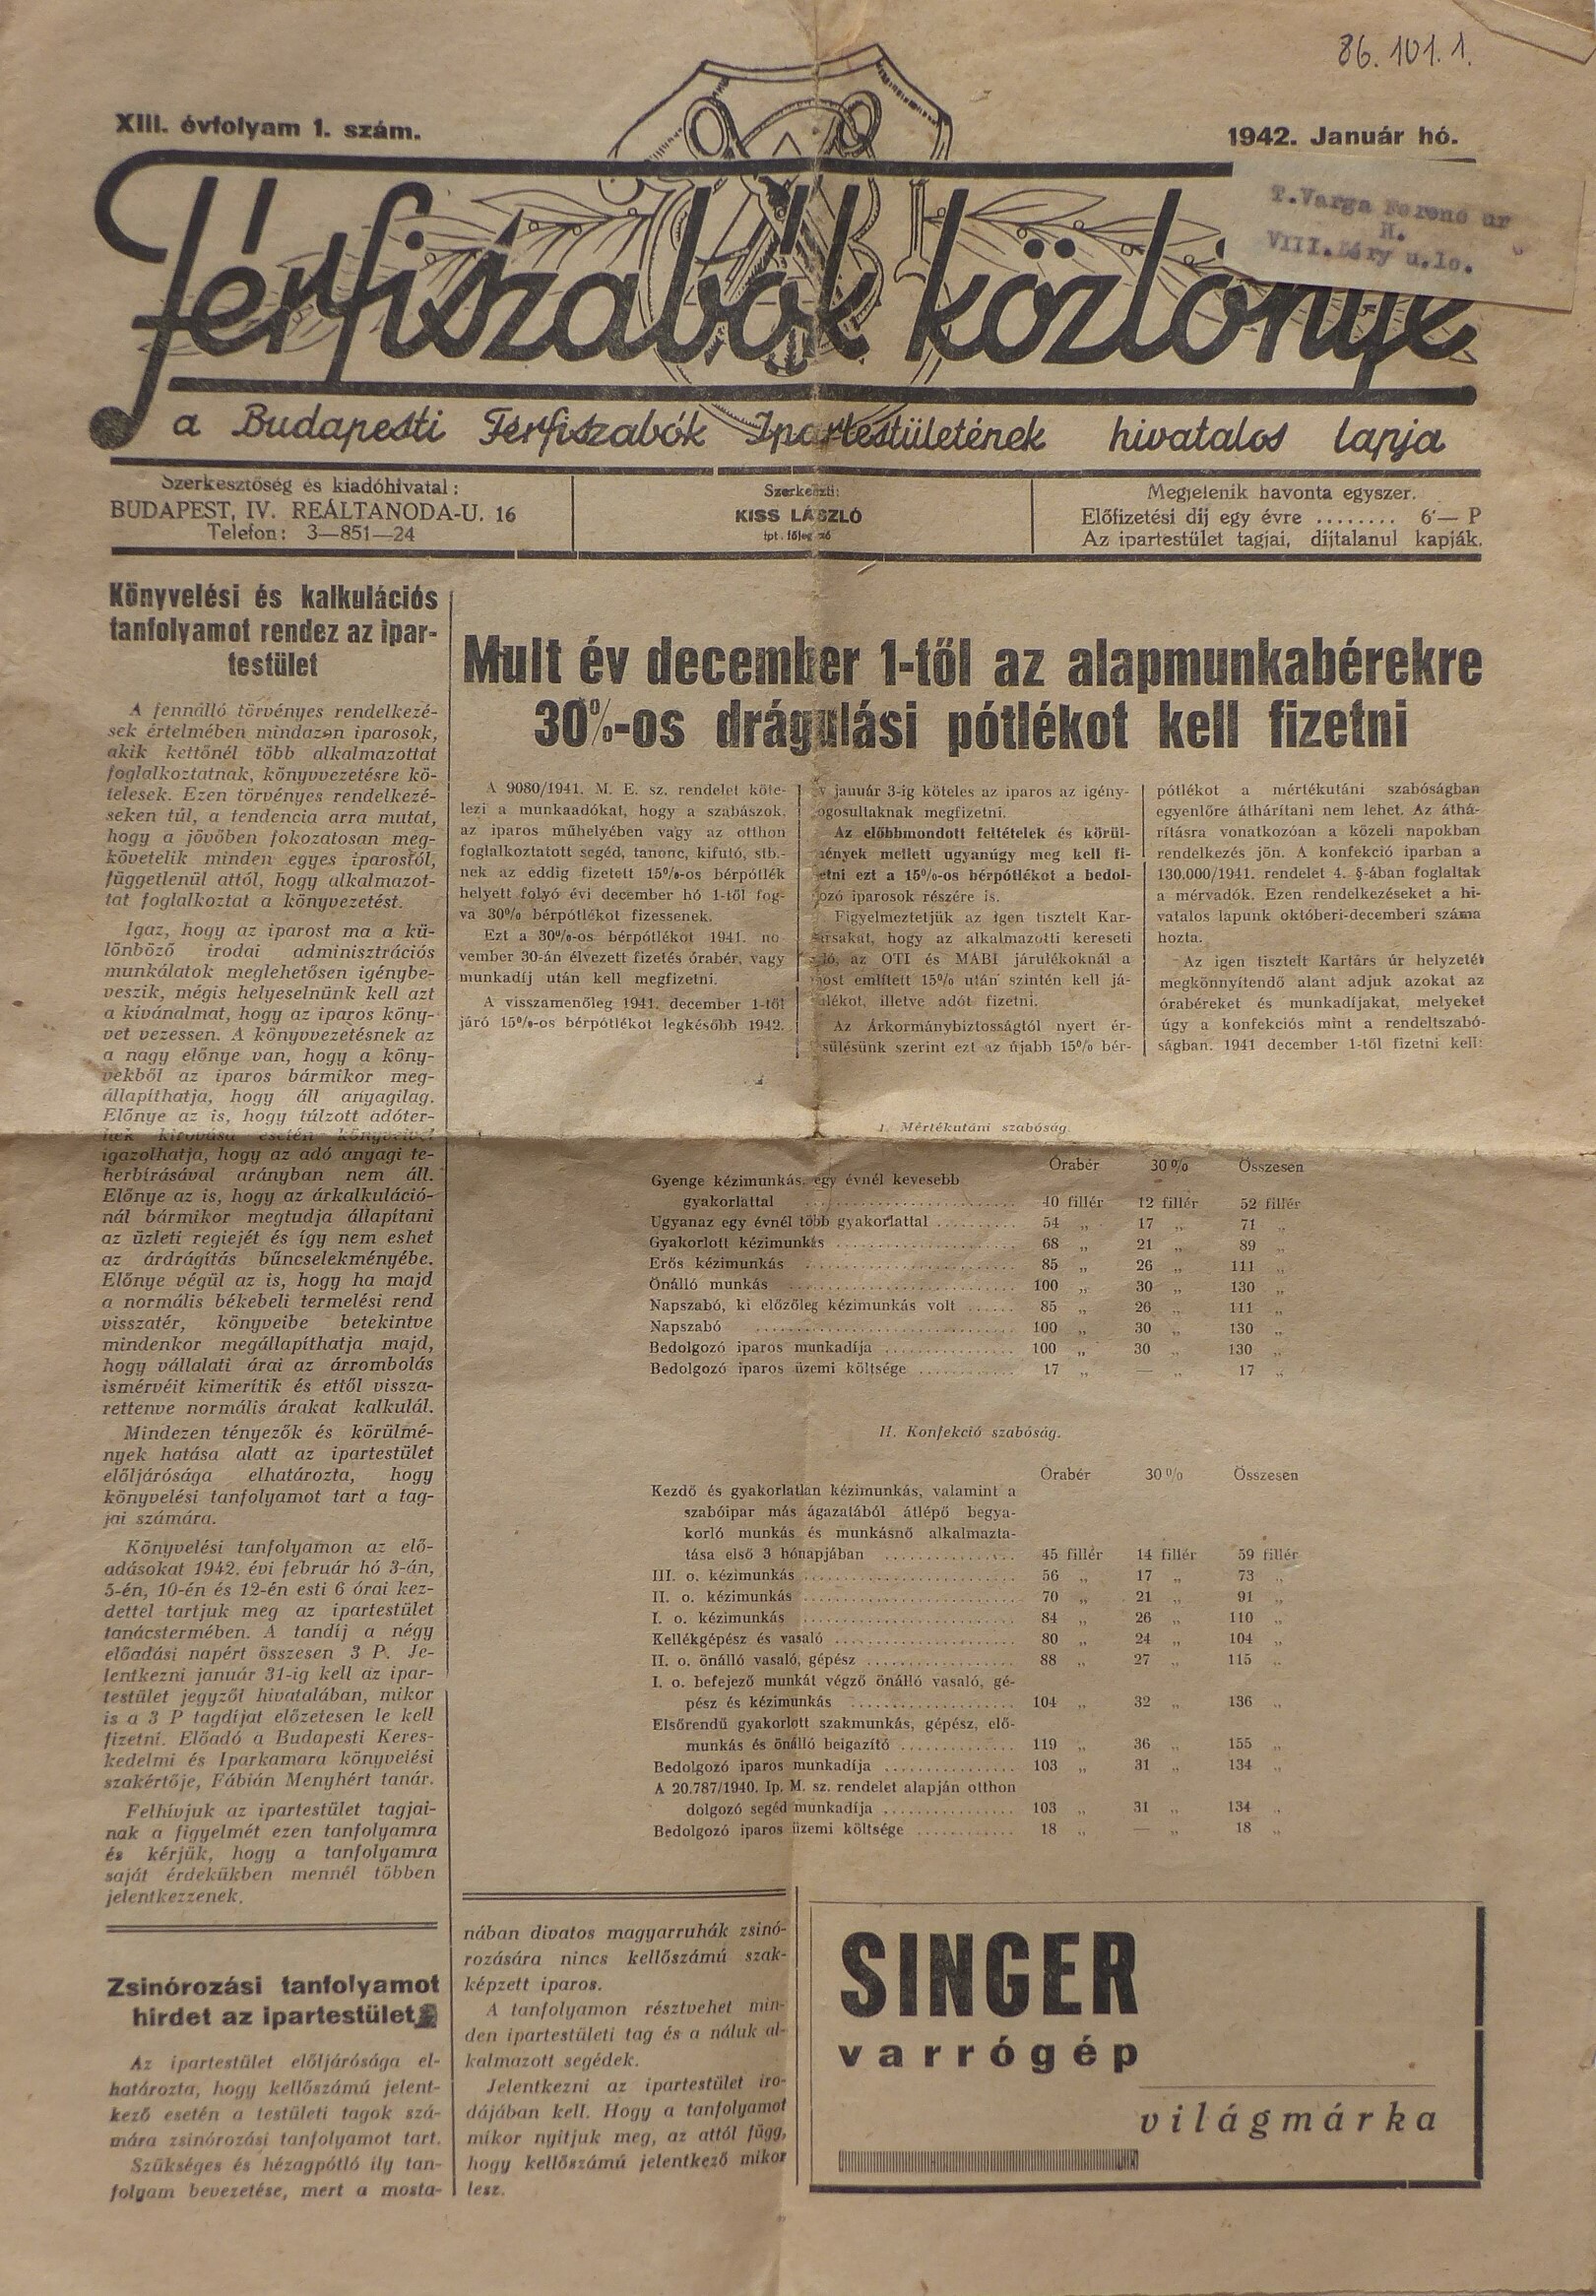 Férfiszabók közlönye 1942 január (Tapolcai Városi Múzeum CC BY-NC-SA)